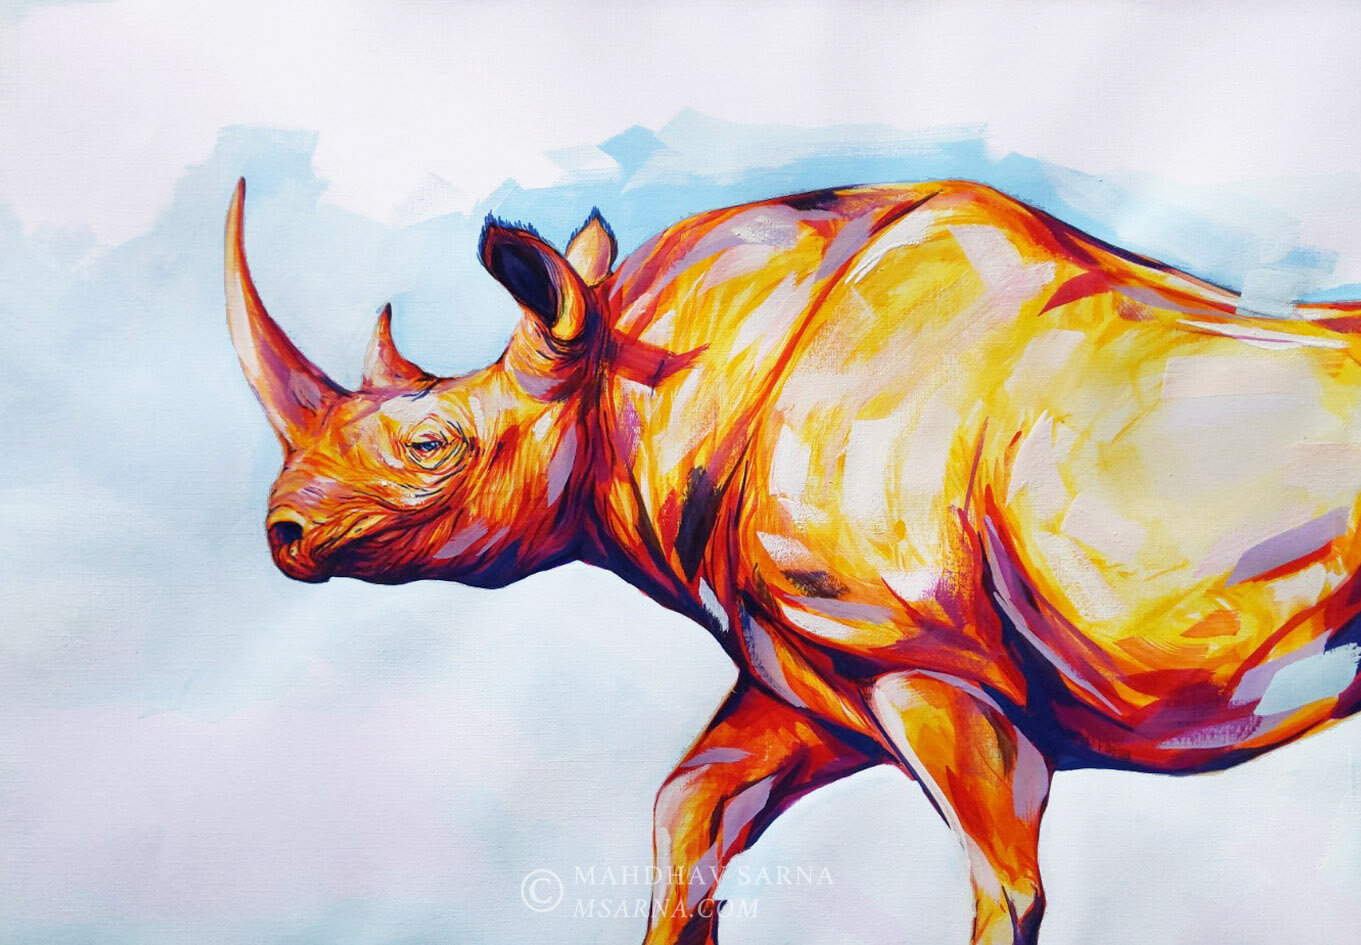 black rhino gouache painting brhs wildlife art mahdhav sarna.jpg